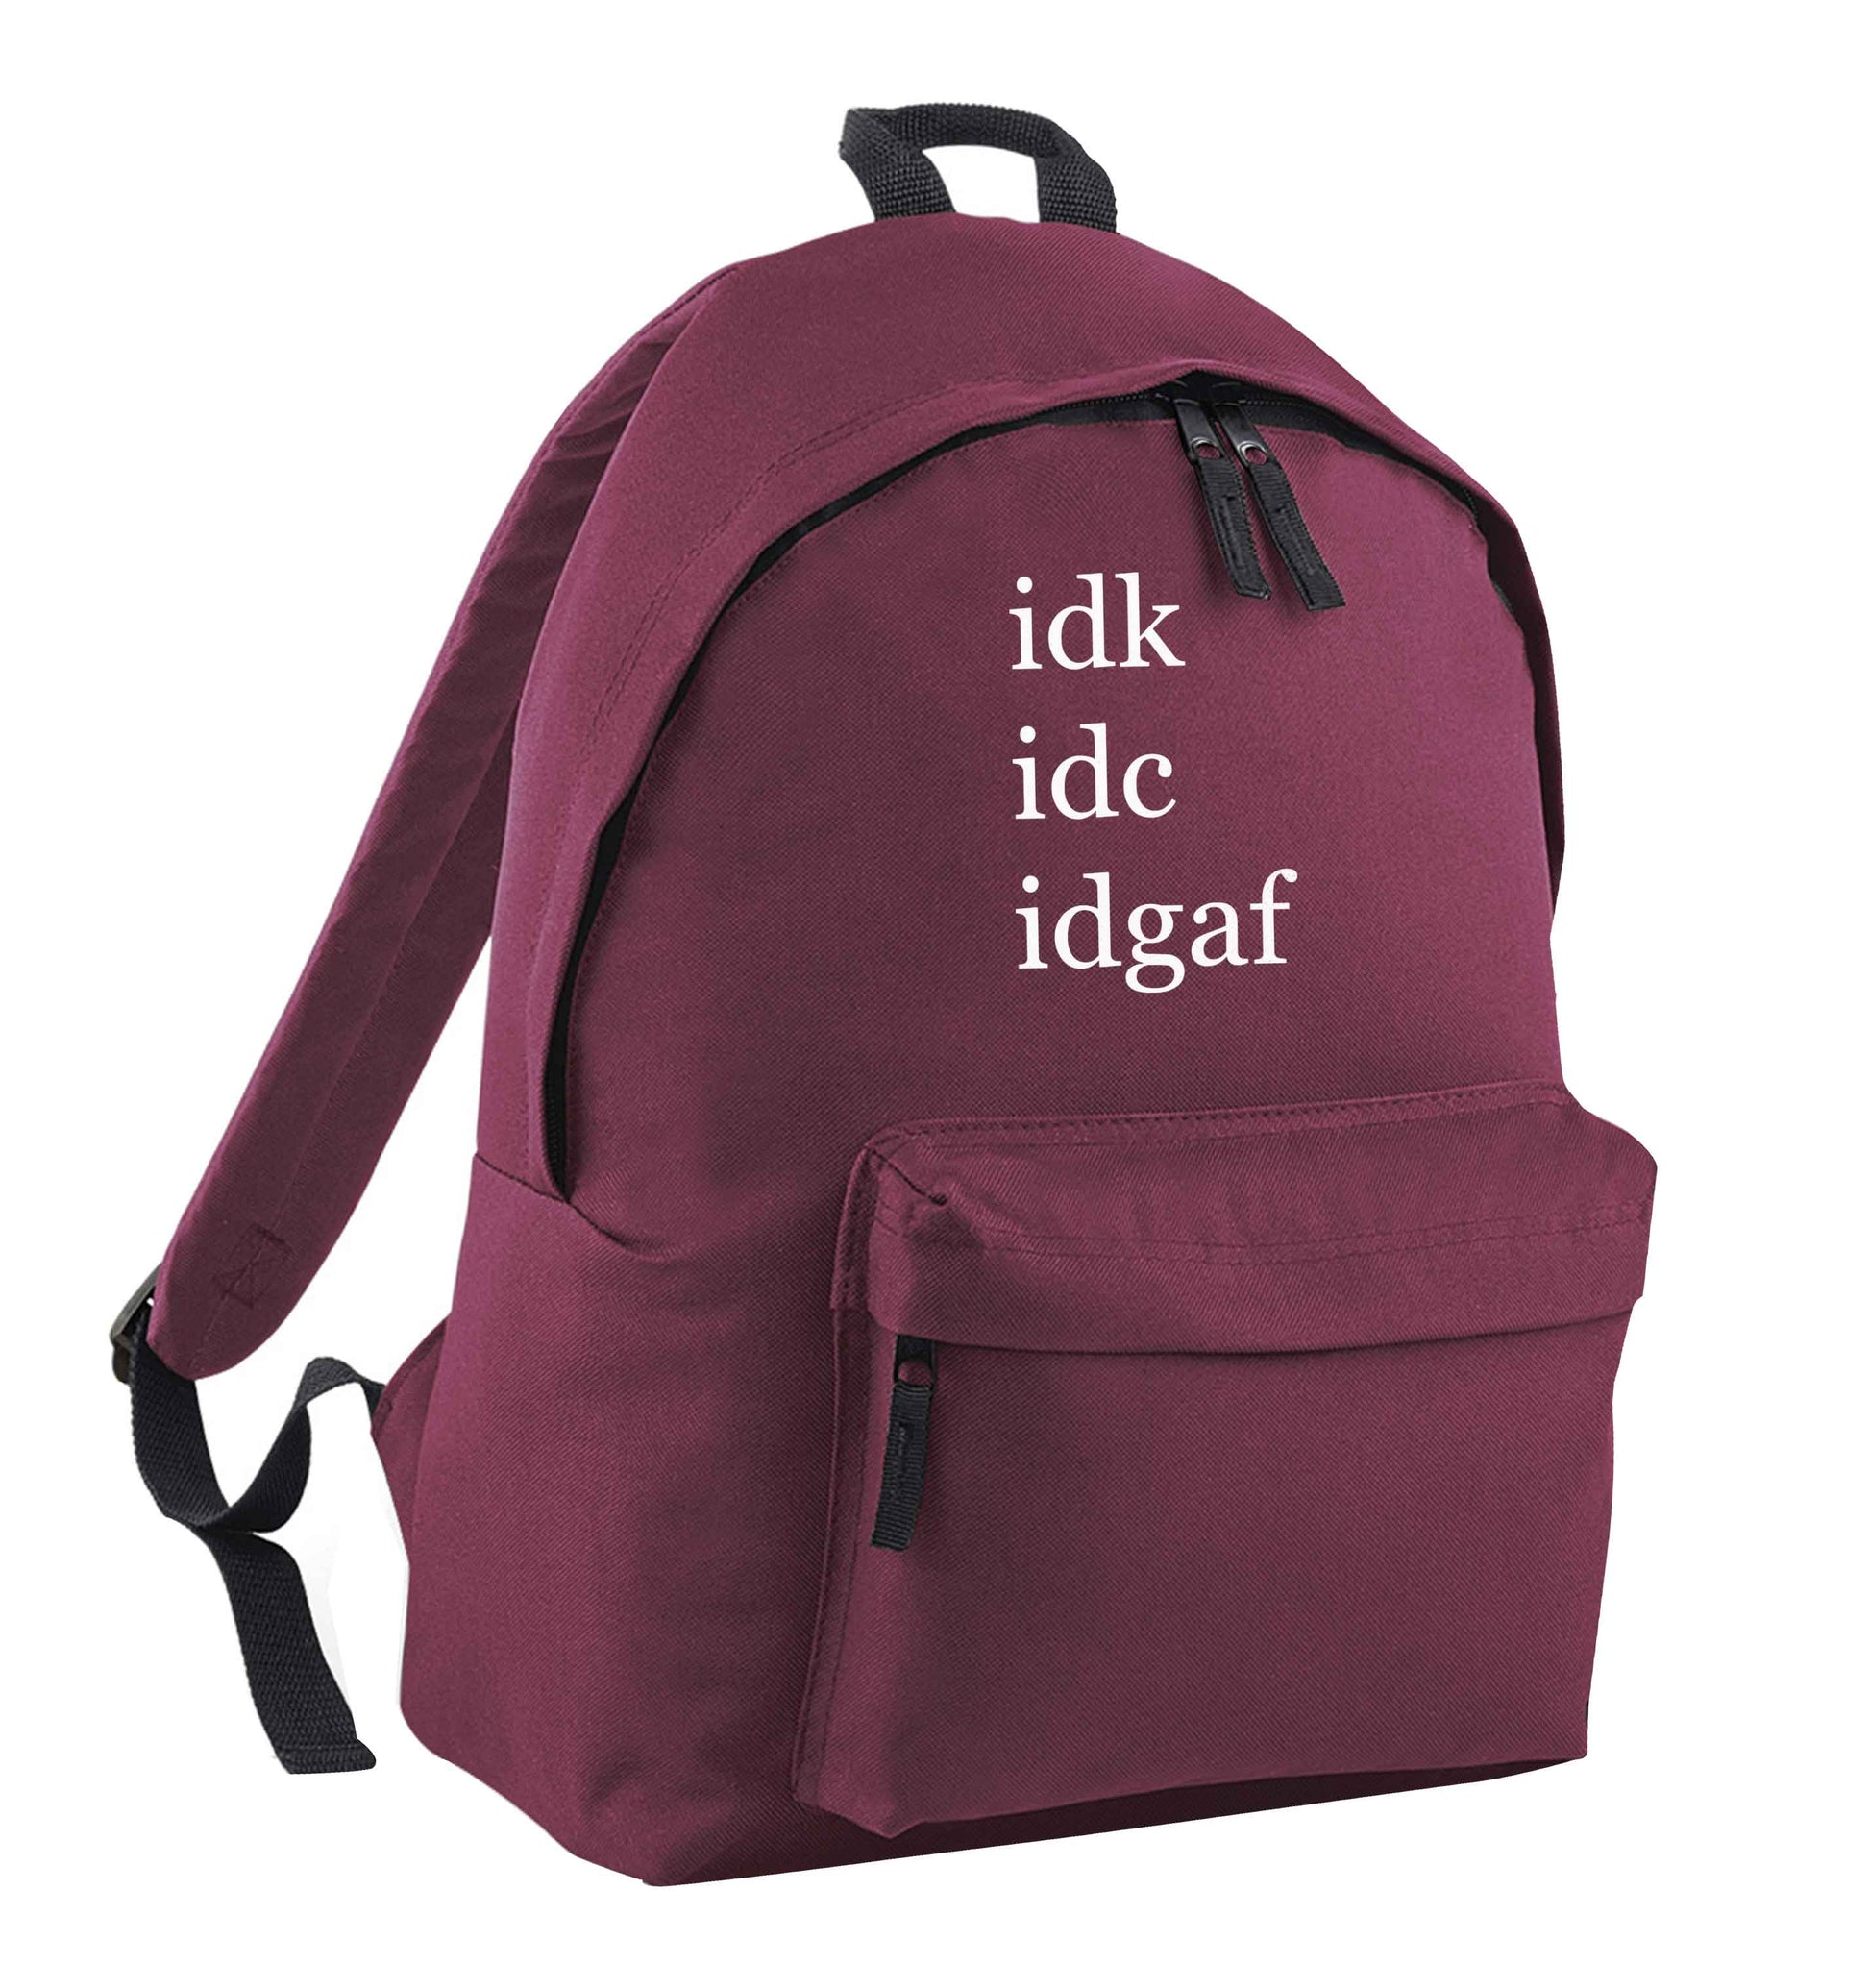 Idk Idc Idgaf maroon adults backpack